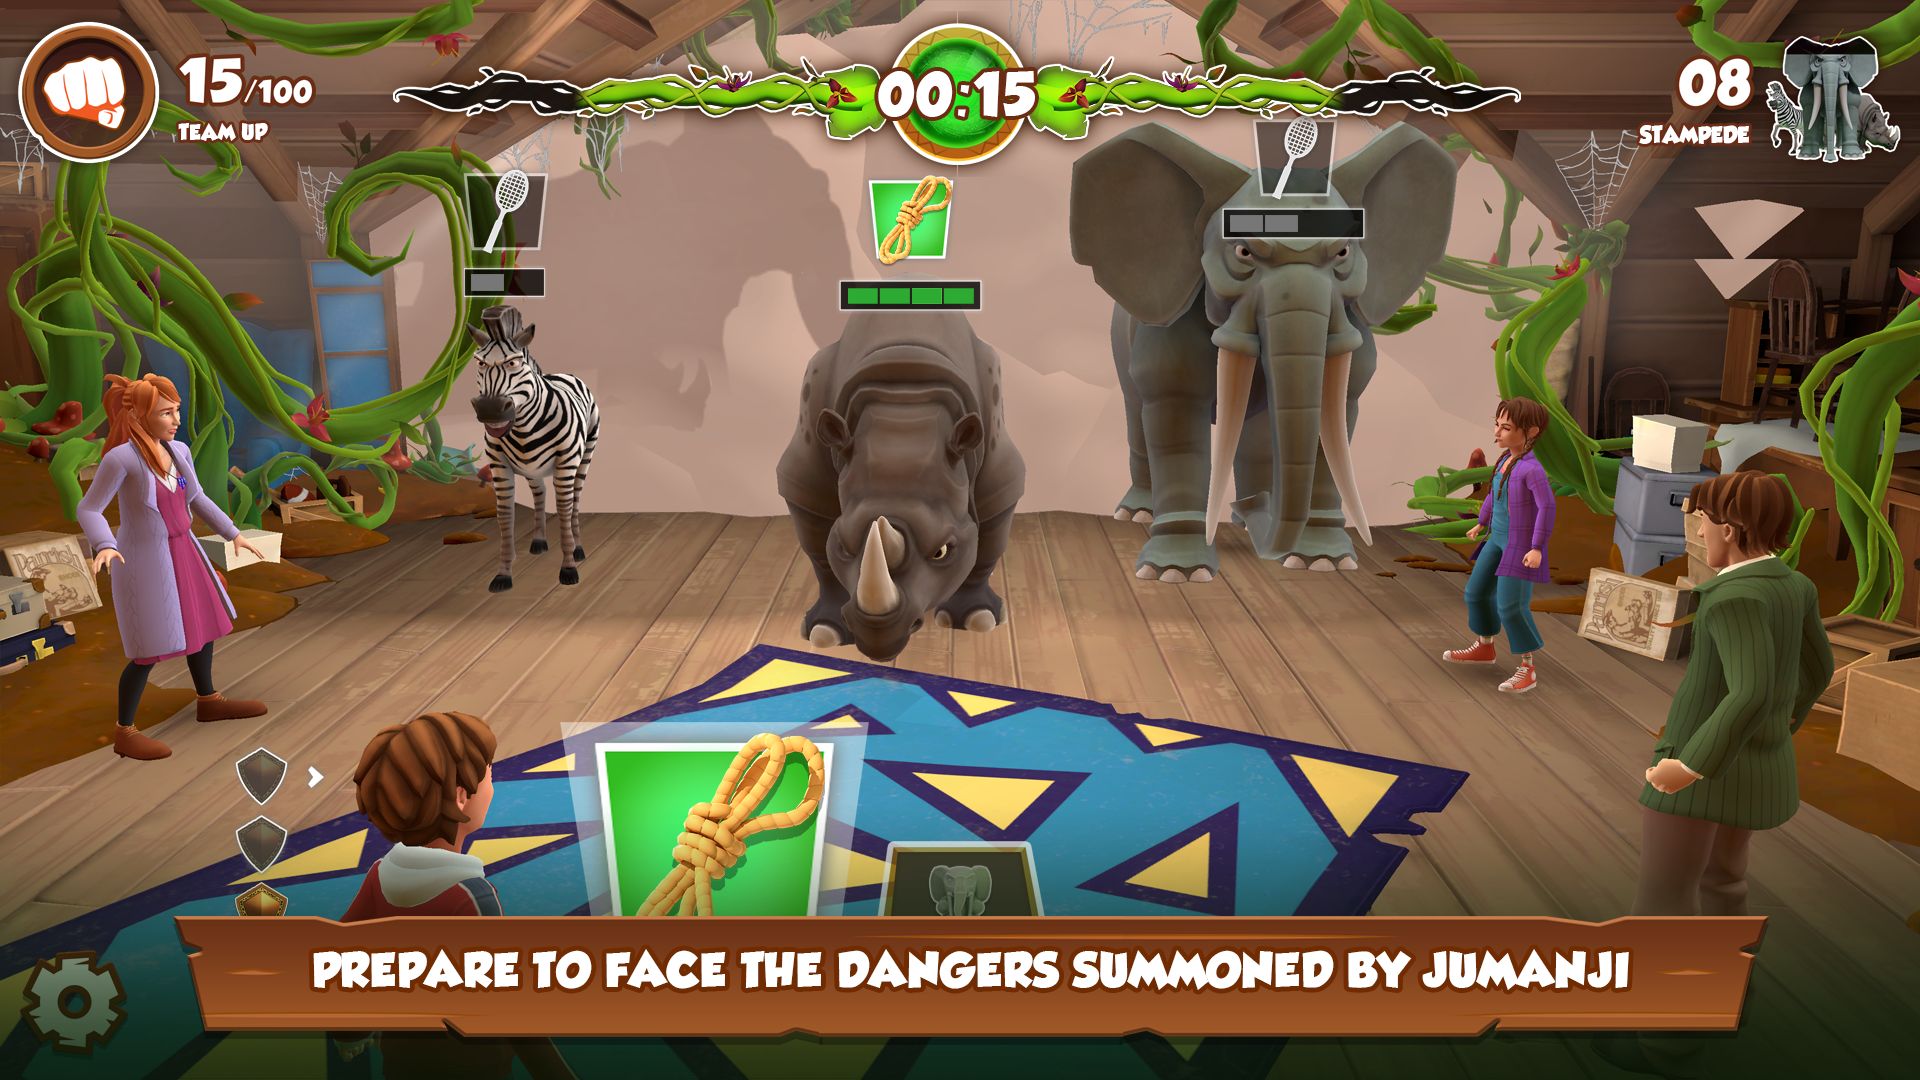 JUMANJI: The Curse Returns - Android game screenshots.